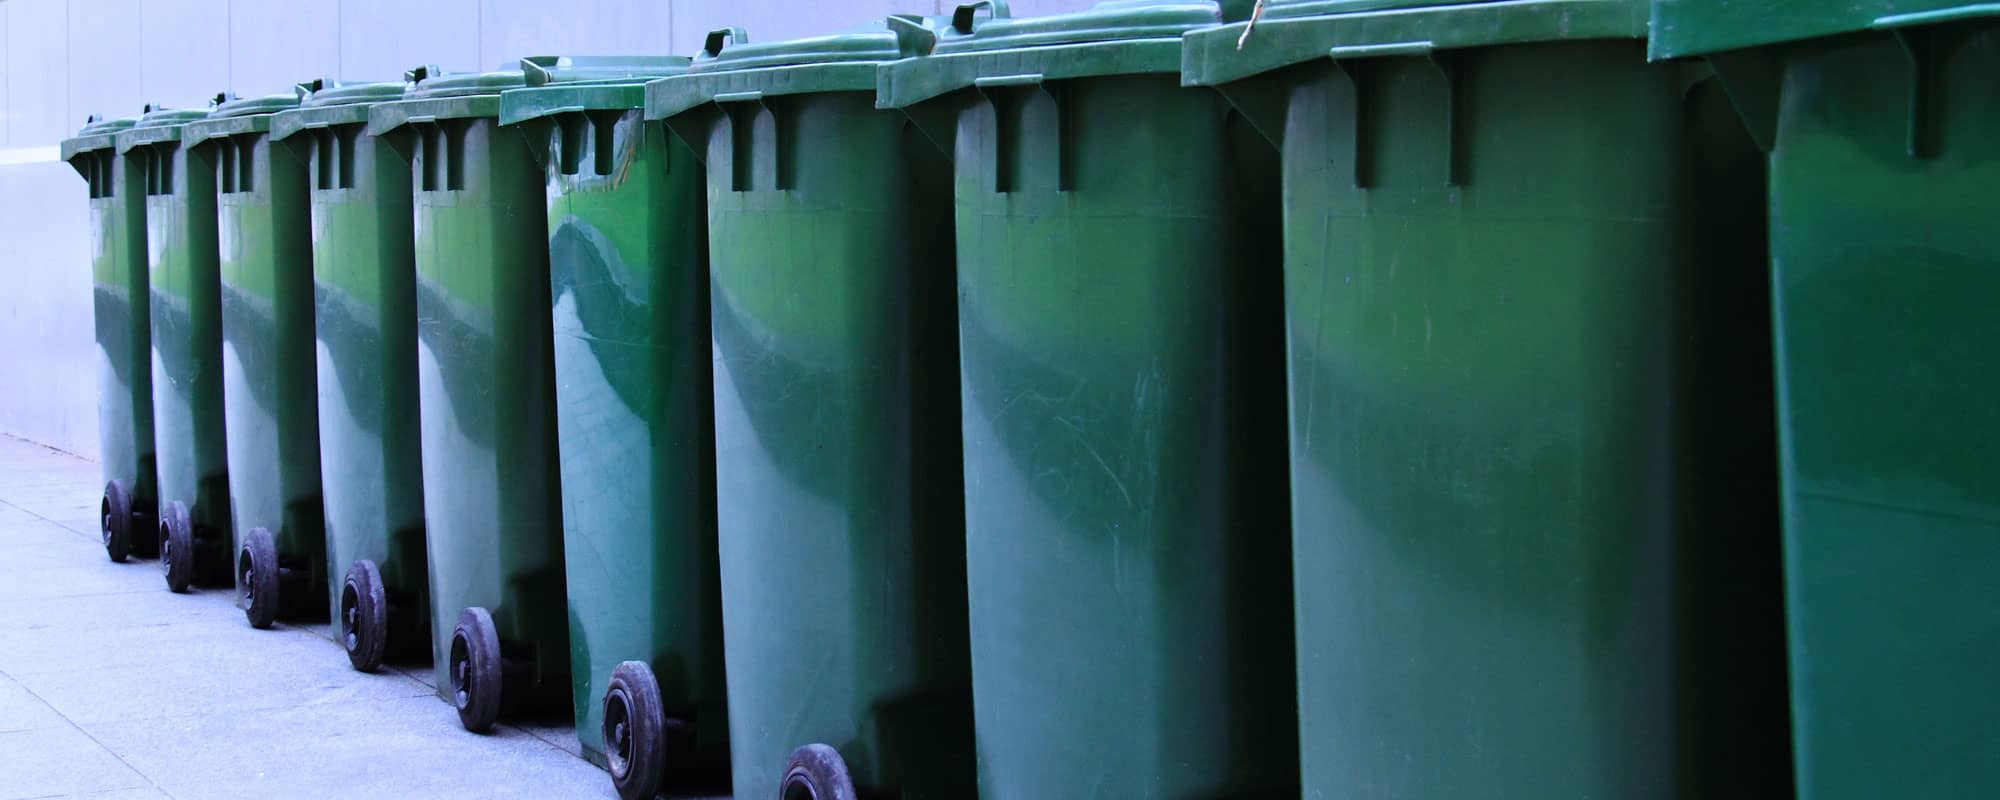 Row of domestic waste bins